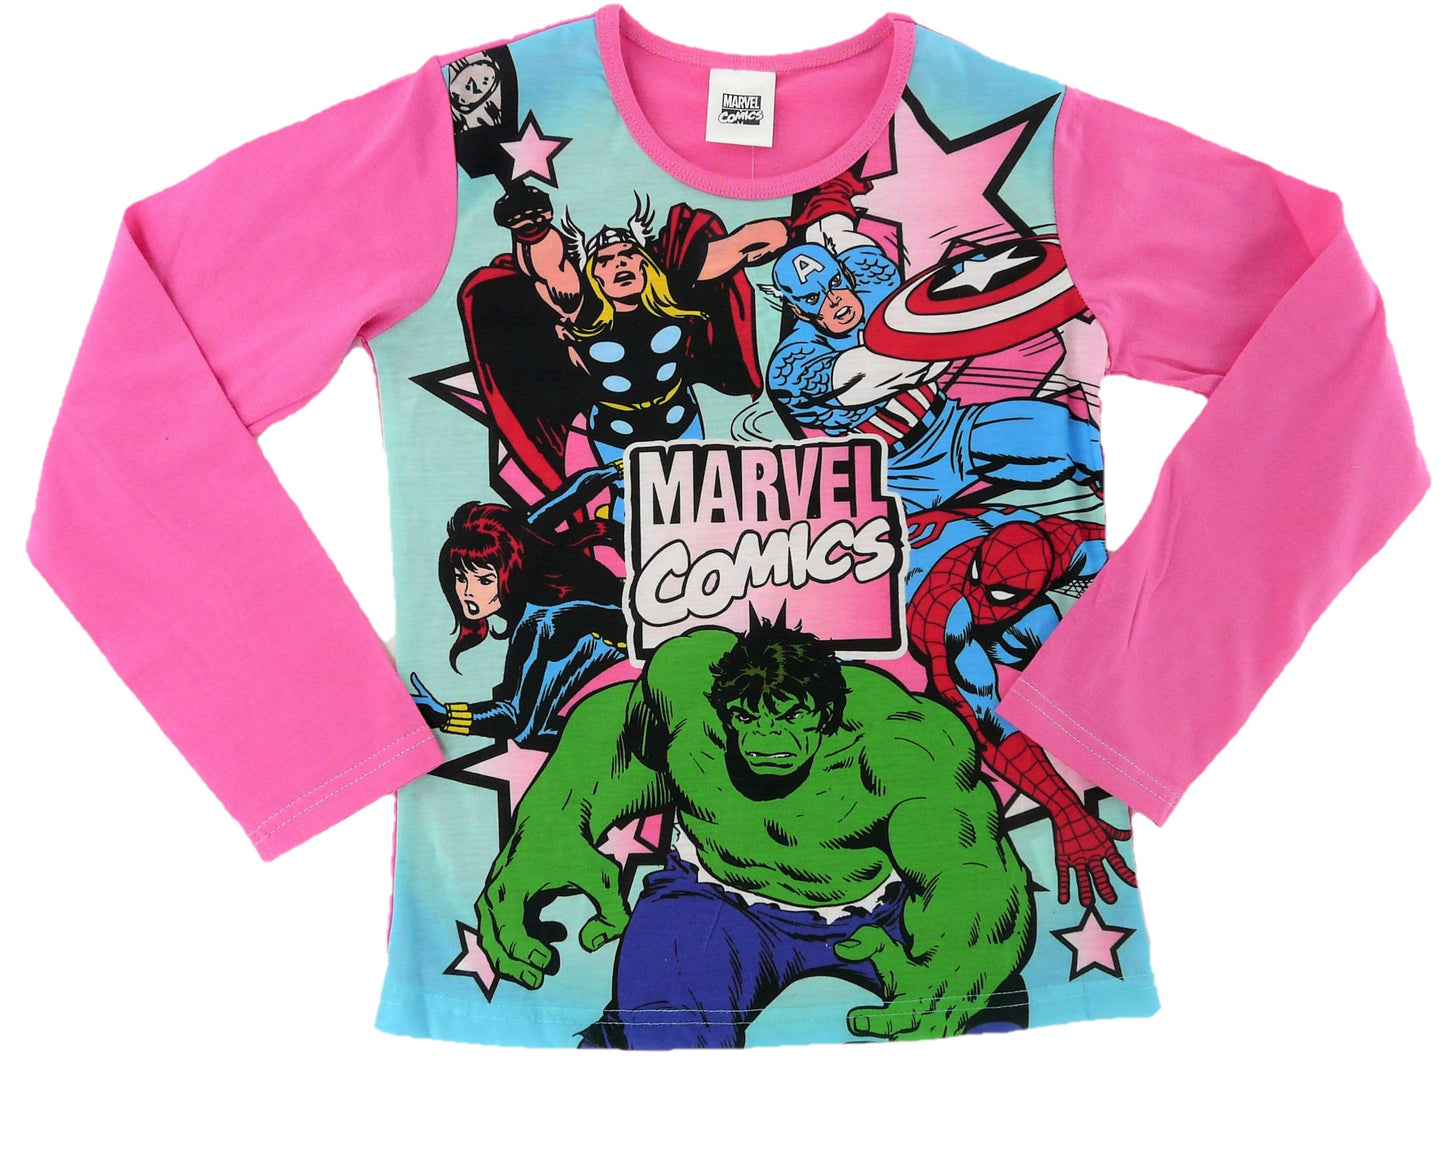 Marvel Comics "Superheroes" Girl's Pink Pyjamas